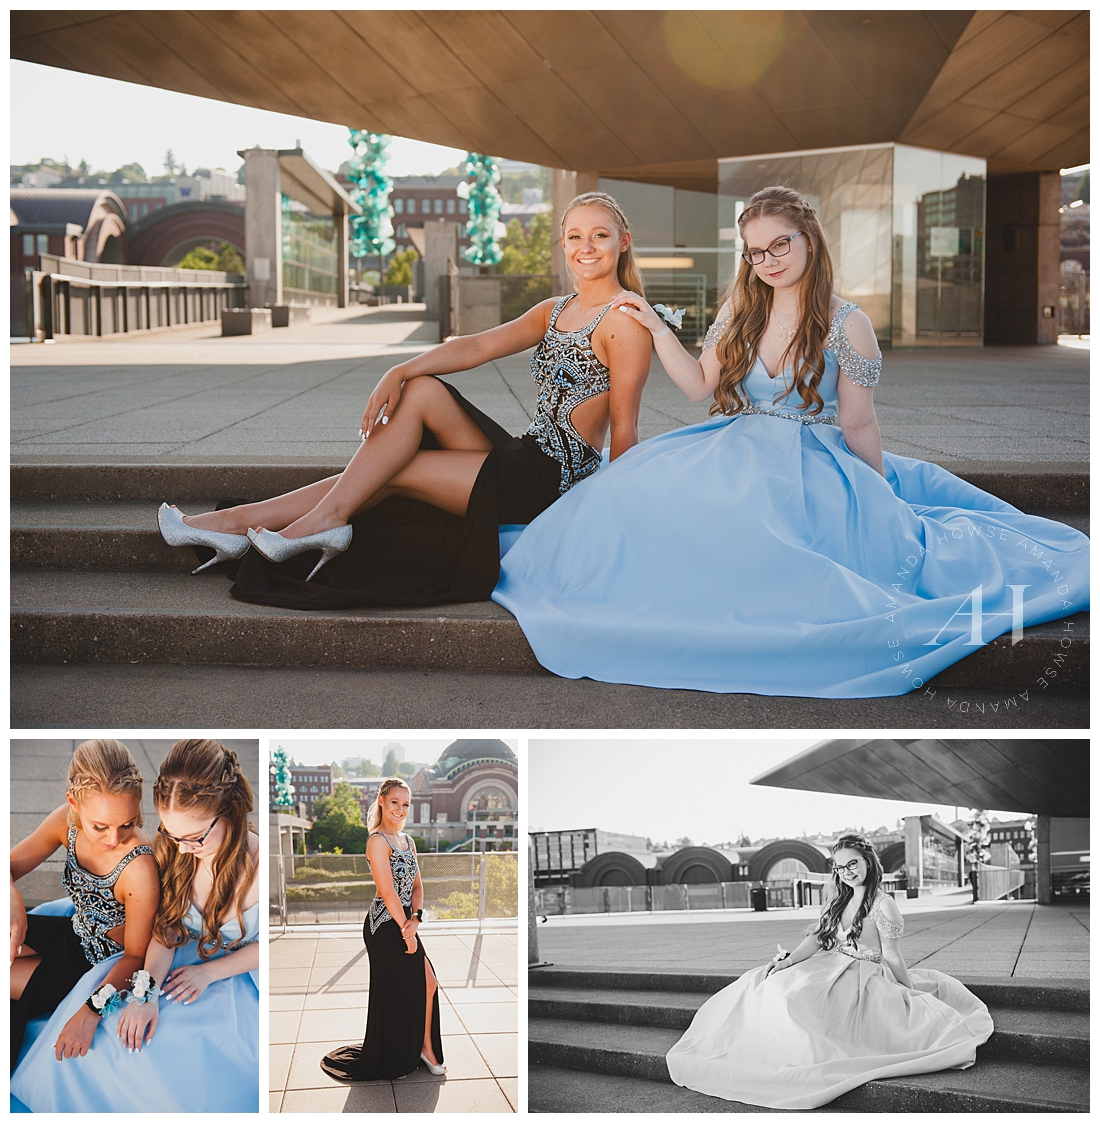 Urban prom dress portraits for high school senior girls photographed by Tacoma senior photographer Amanda Howse